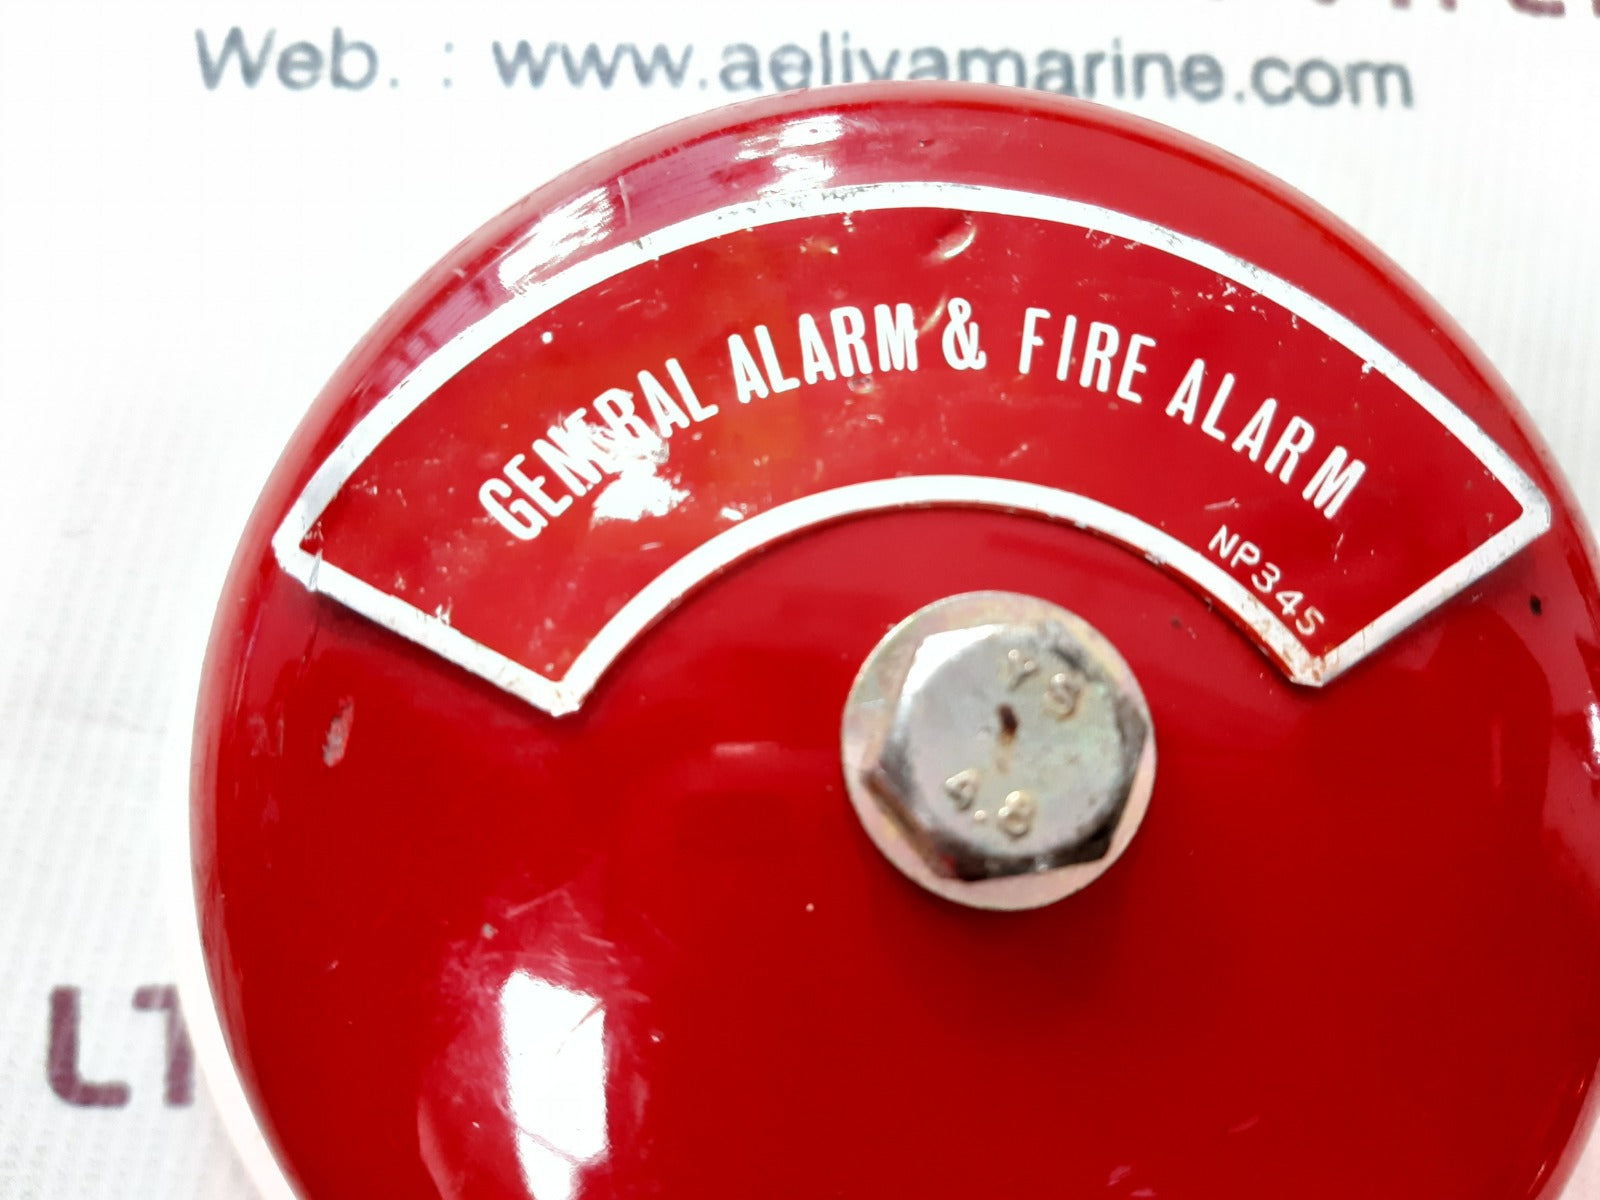 General alarm & fire alarm 220v 50/60hz 8va